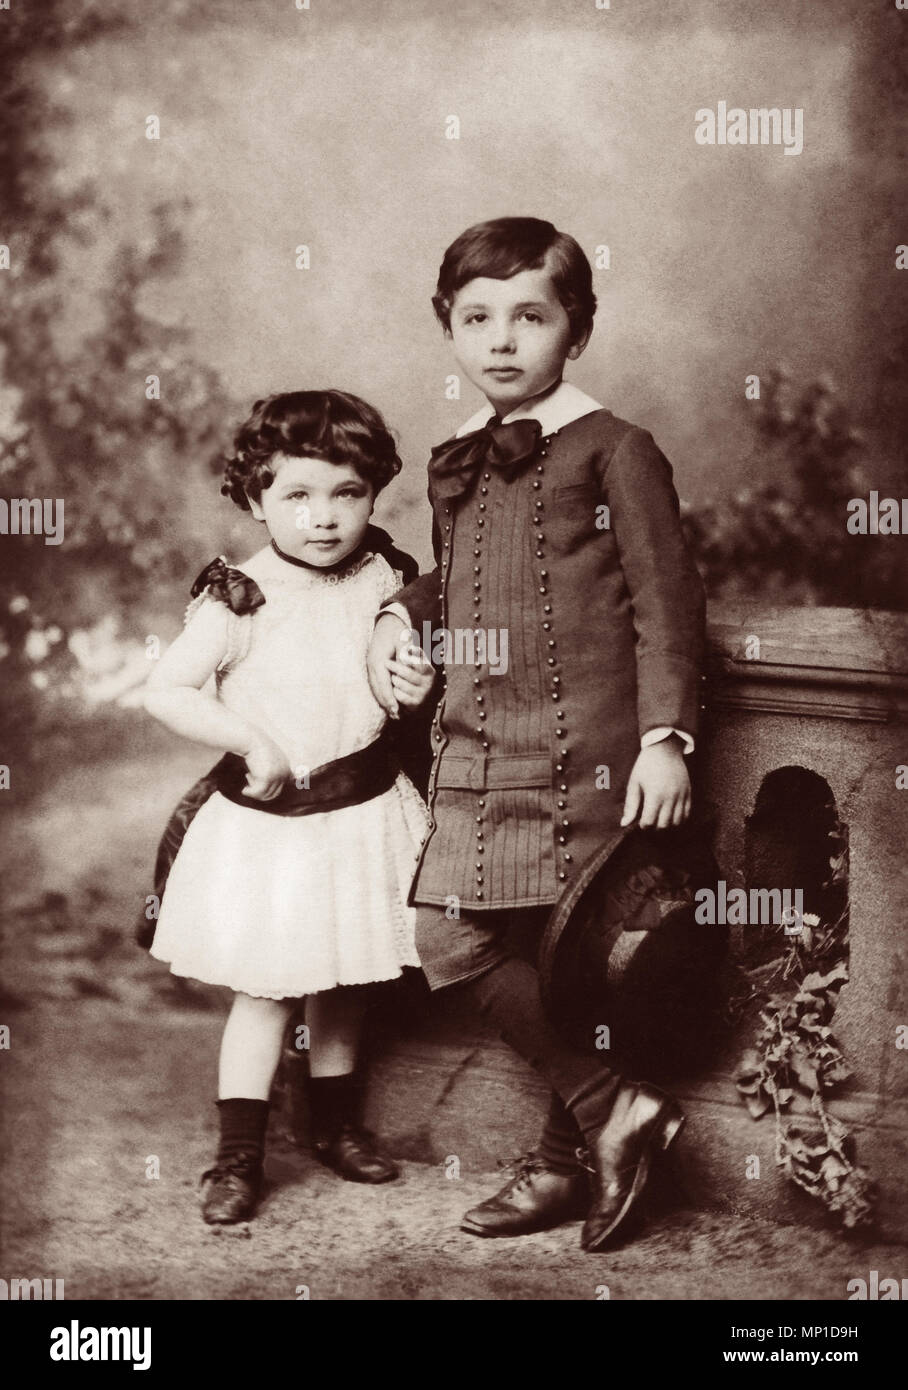 Bambino Albert Einstein Immagini e Fotos Stock - Alamy